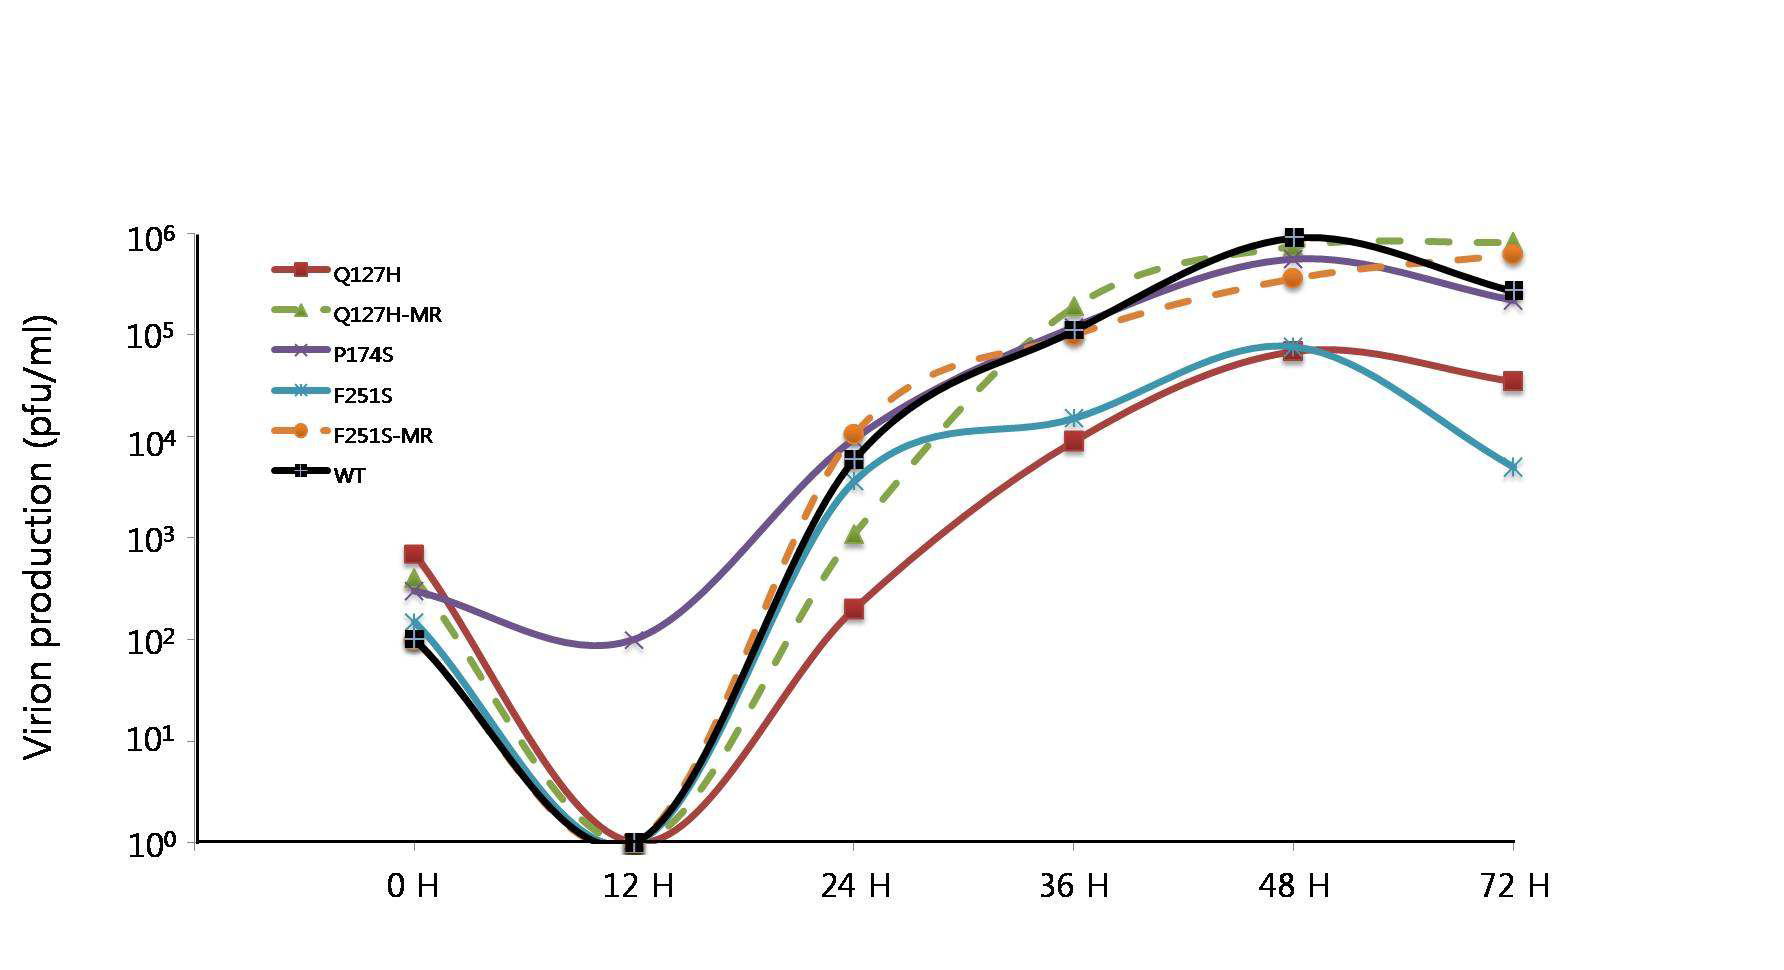 MHV-68 ORF37 단백돌연변이 바이러스의 multiple step growth curve 분석